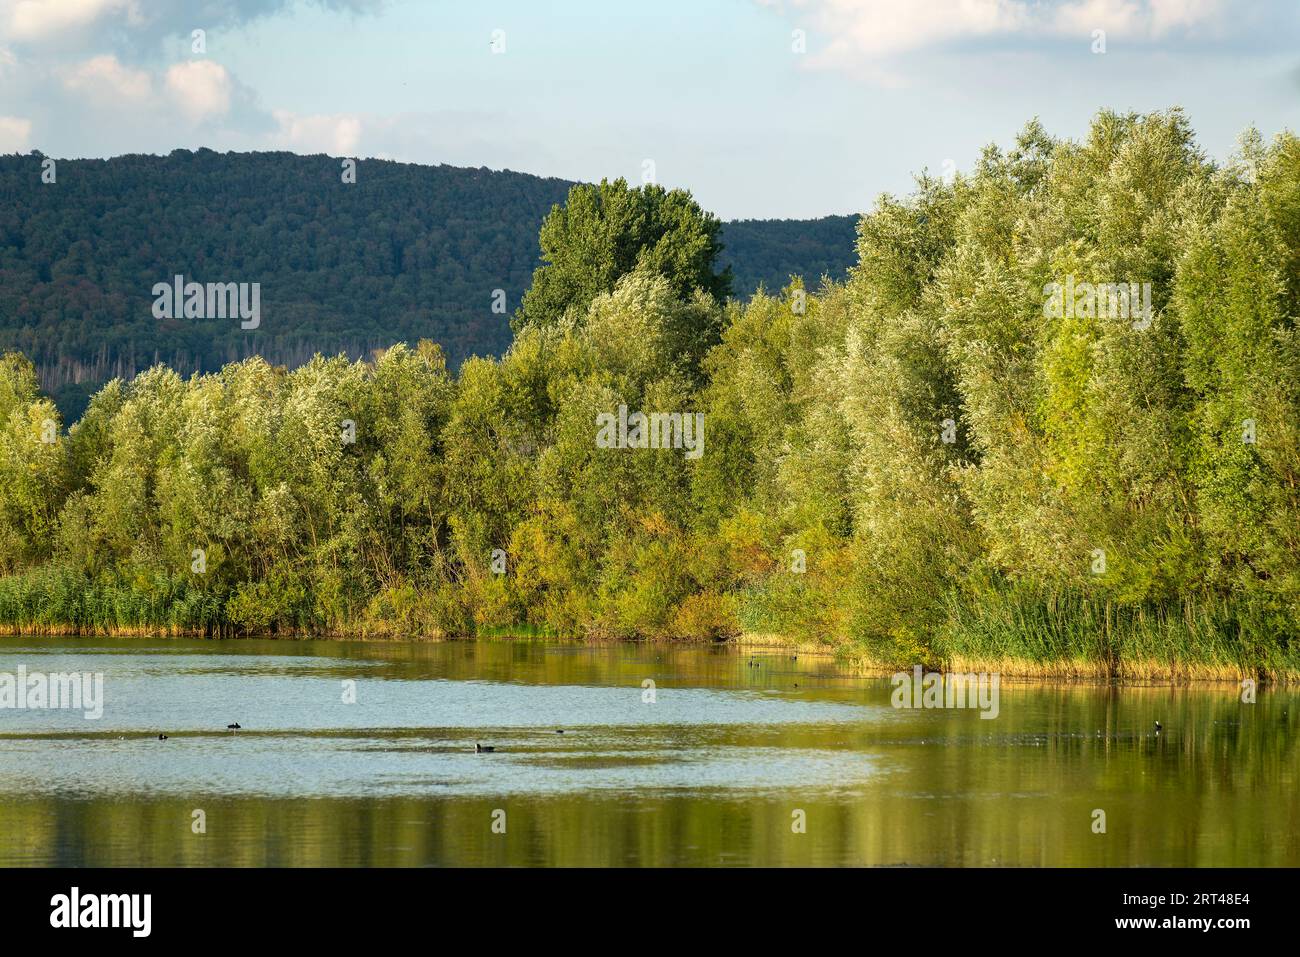 Ruhiger See im Naturschutzgebiet Auenlandschaft Hohenrode bei Rinteln, Weserbergland, Deutschland Stockfoto